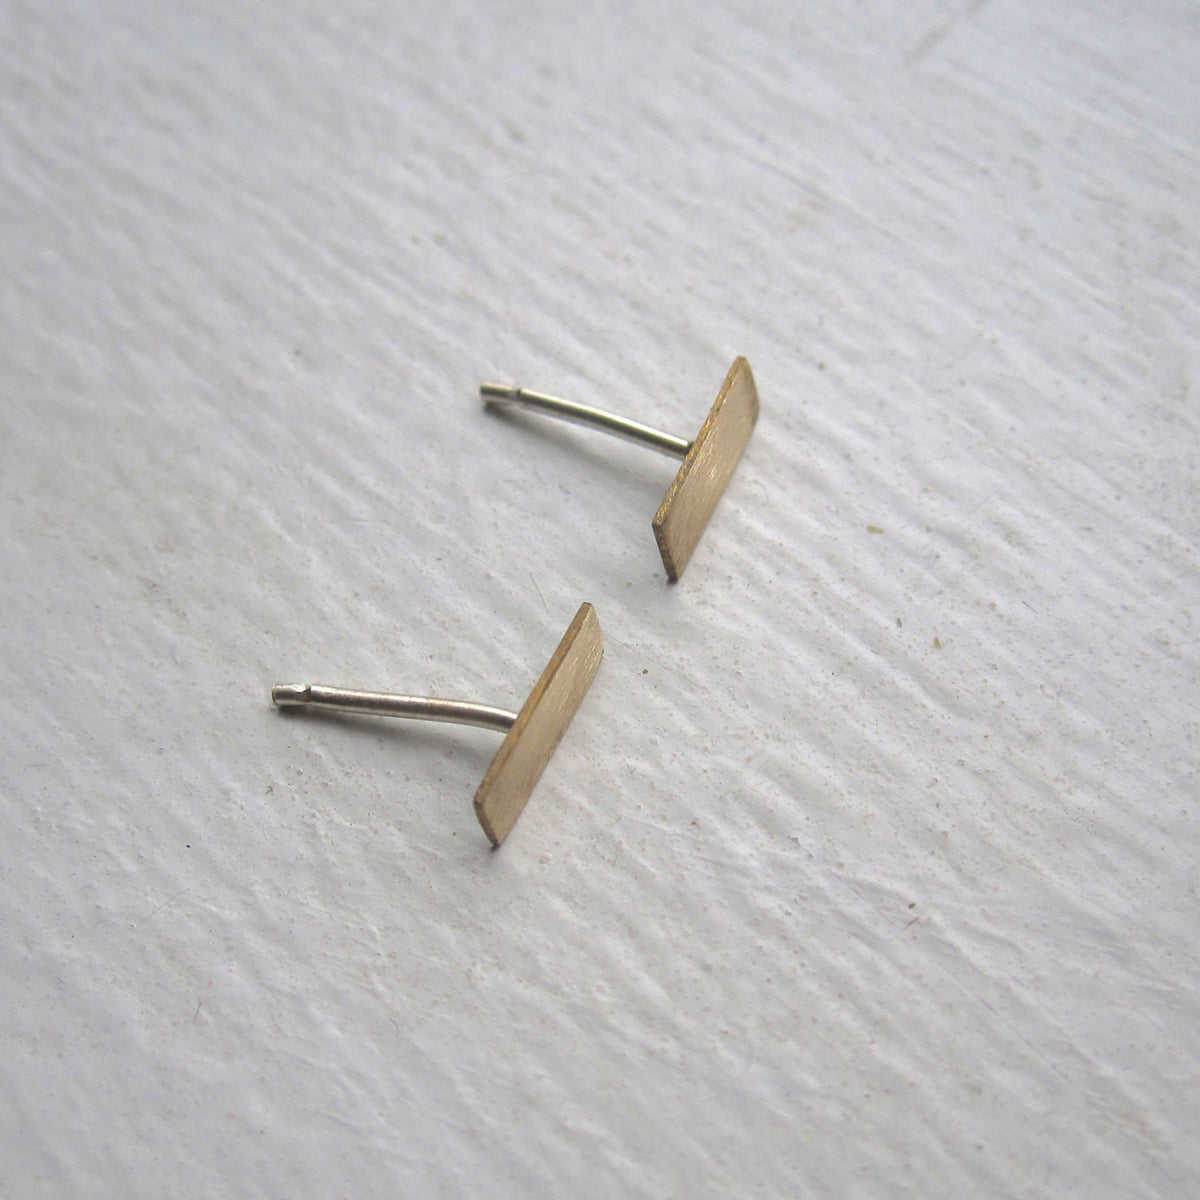 Short Flat Teeny Tiny Skinny Brass Thin Rectangle Bar Stud Earrings - 0119 - Virginia Wynne Designs